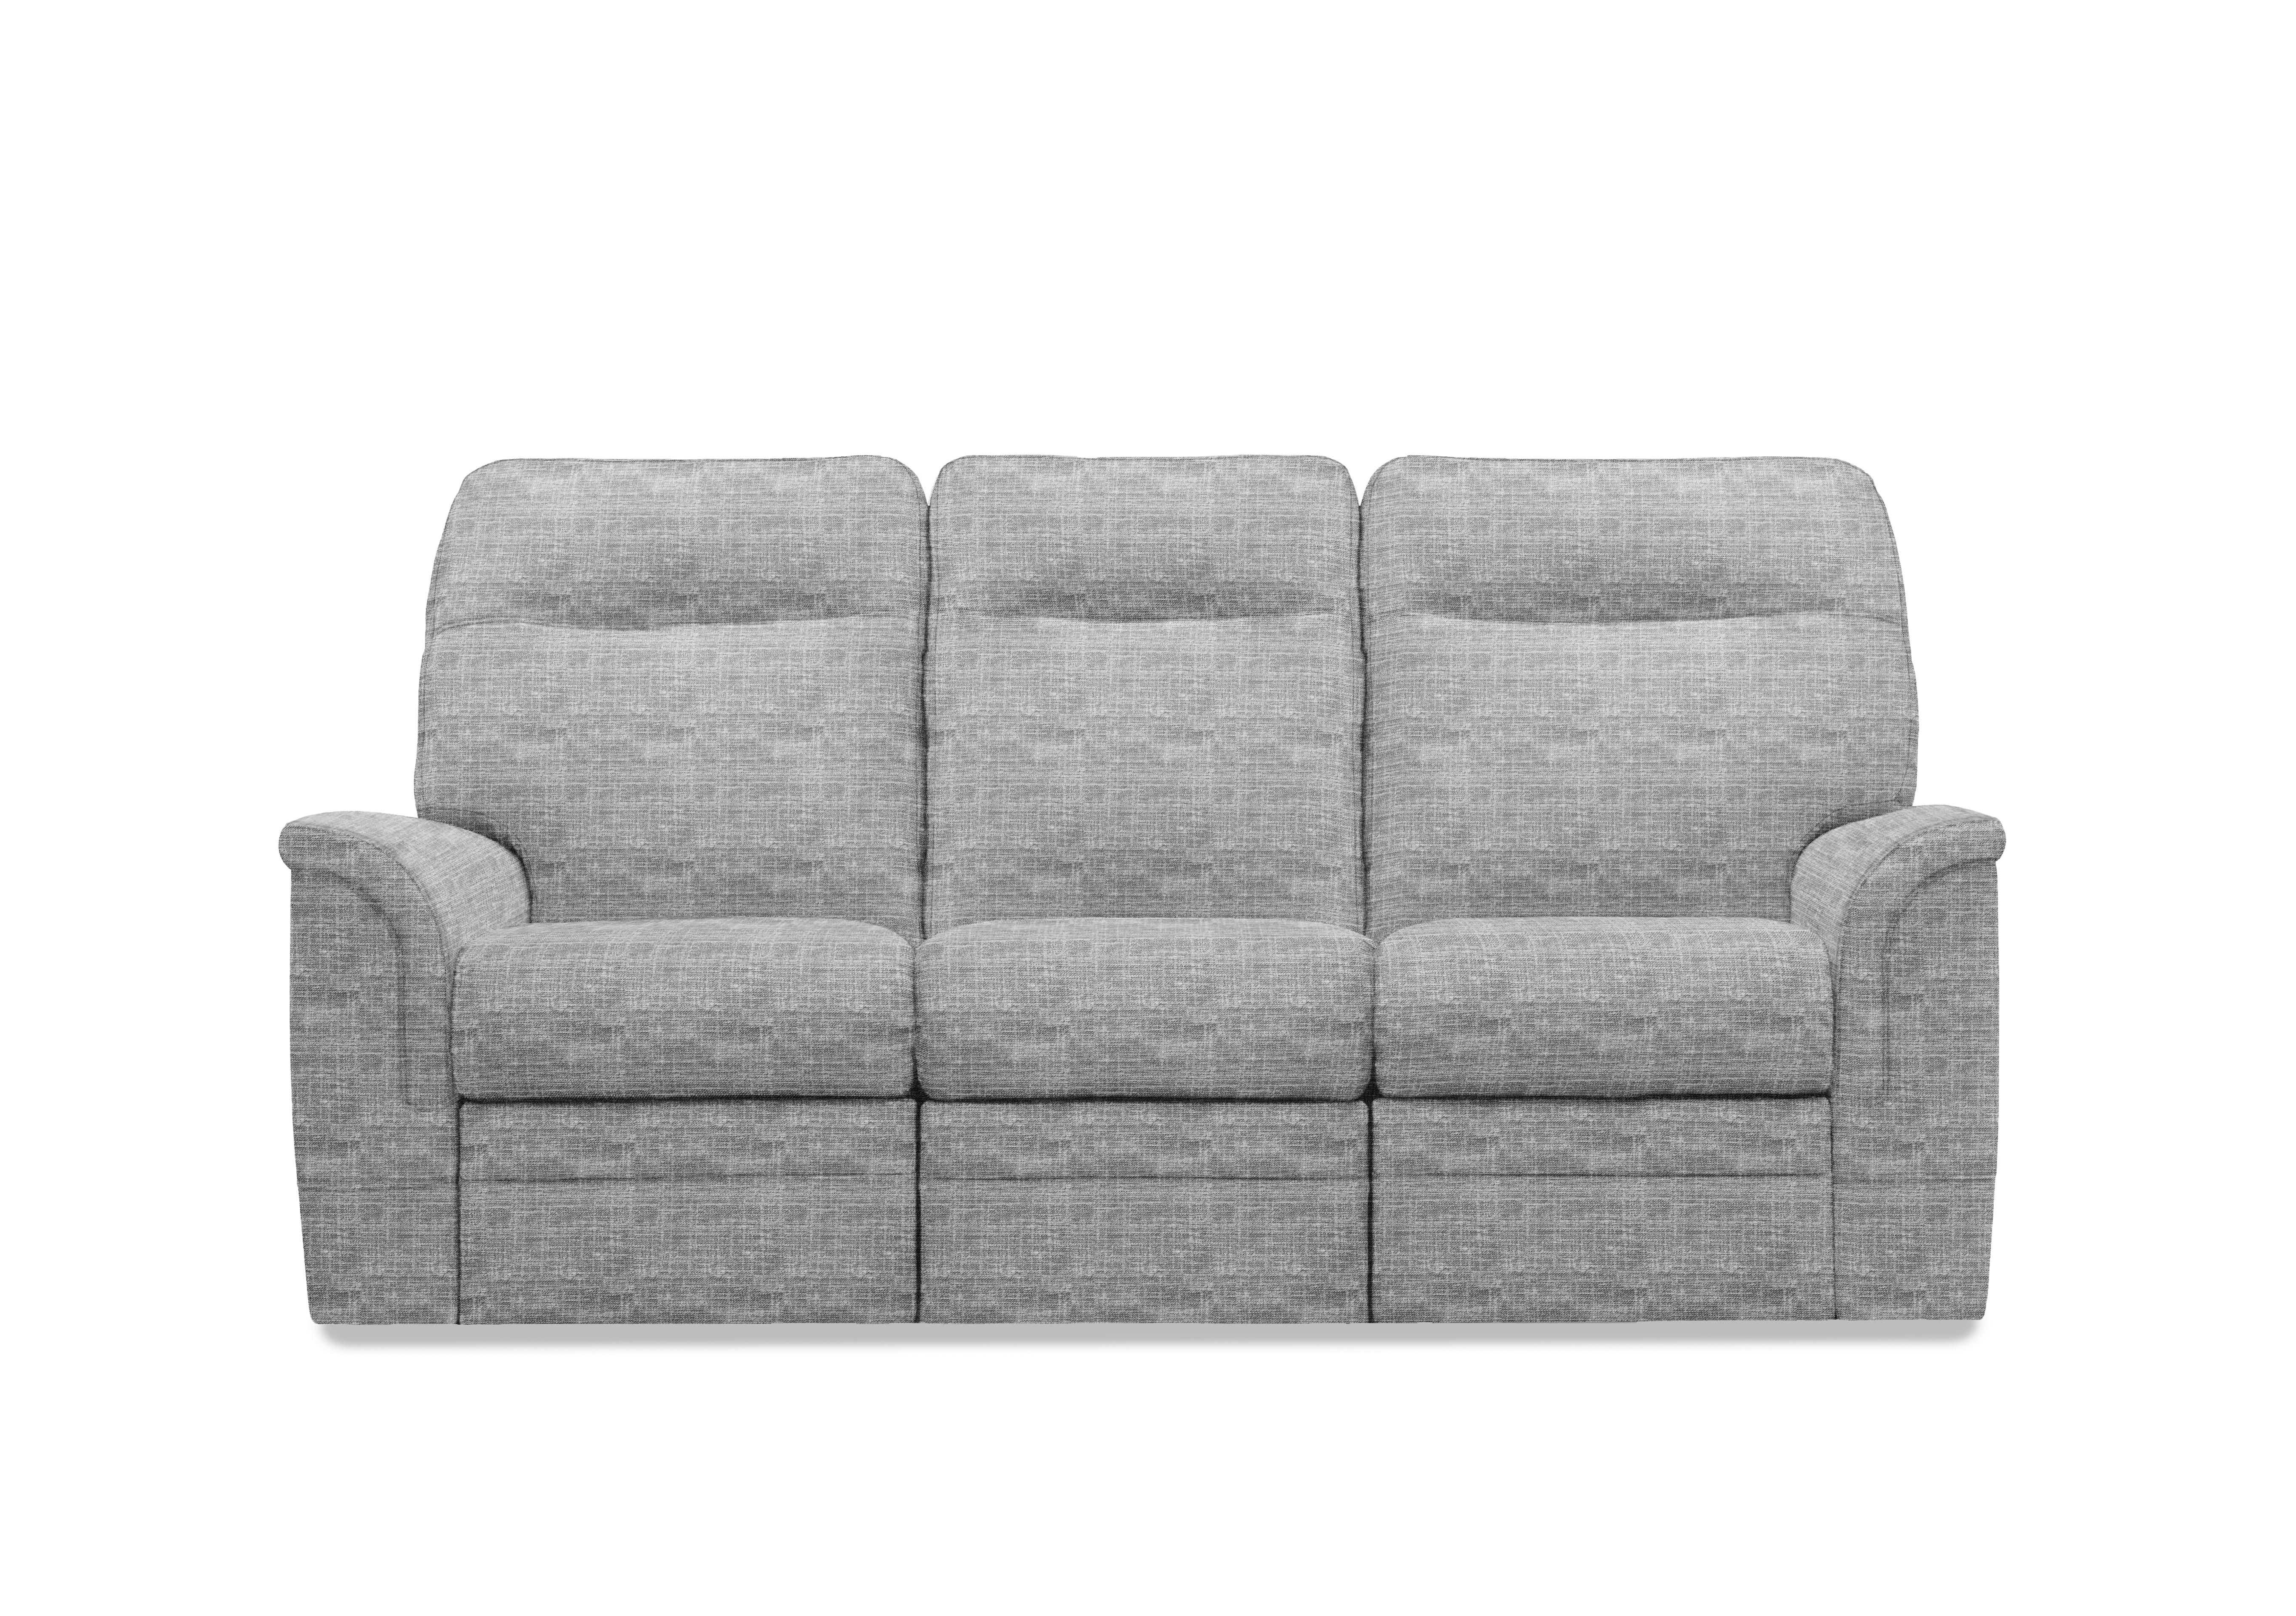 Hudson 23 Fabric 3 Seater Sofa in Dash Stone  001497-0040 on Furniture Village